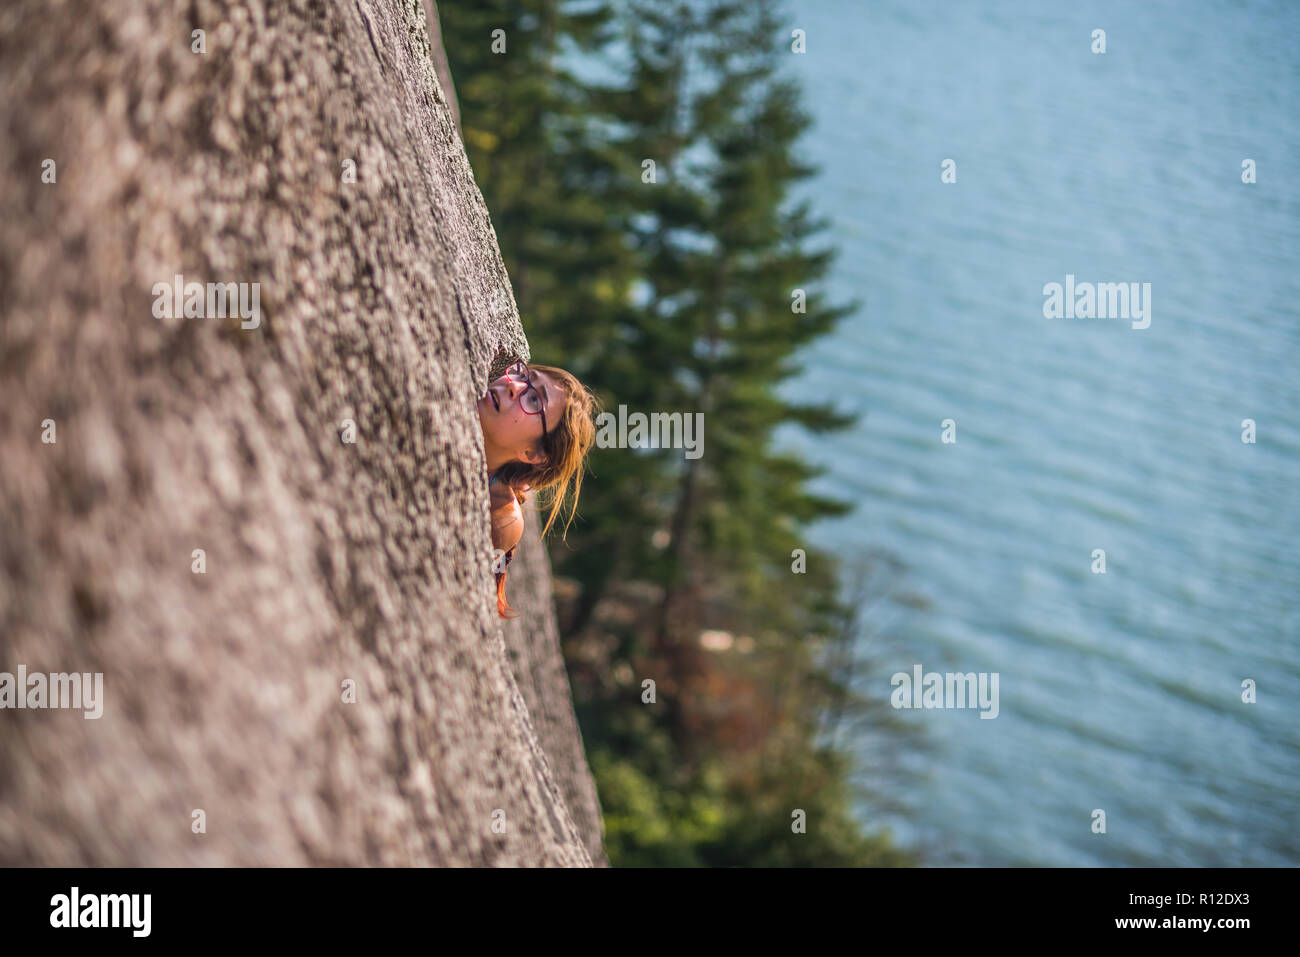 Woman rock climbing, Malamute, Squamish, Canada Stock Photo